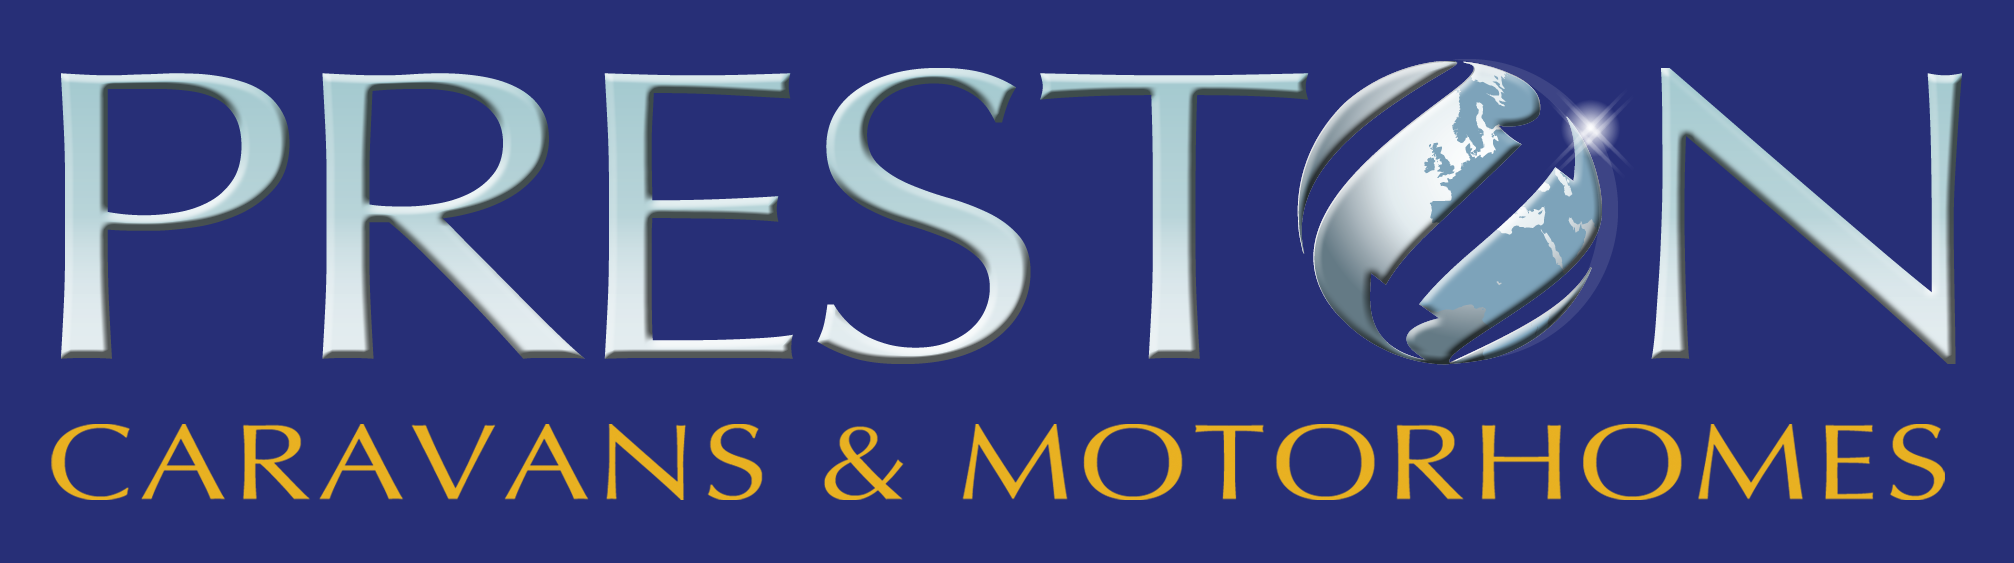 Preston Caravans & Motorhomes Logo